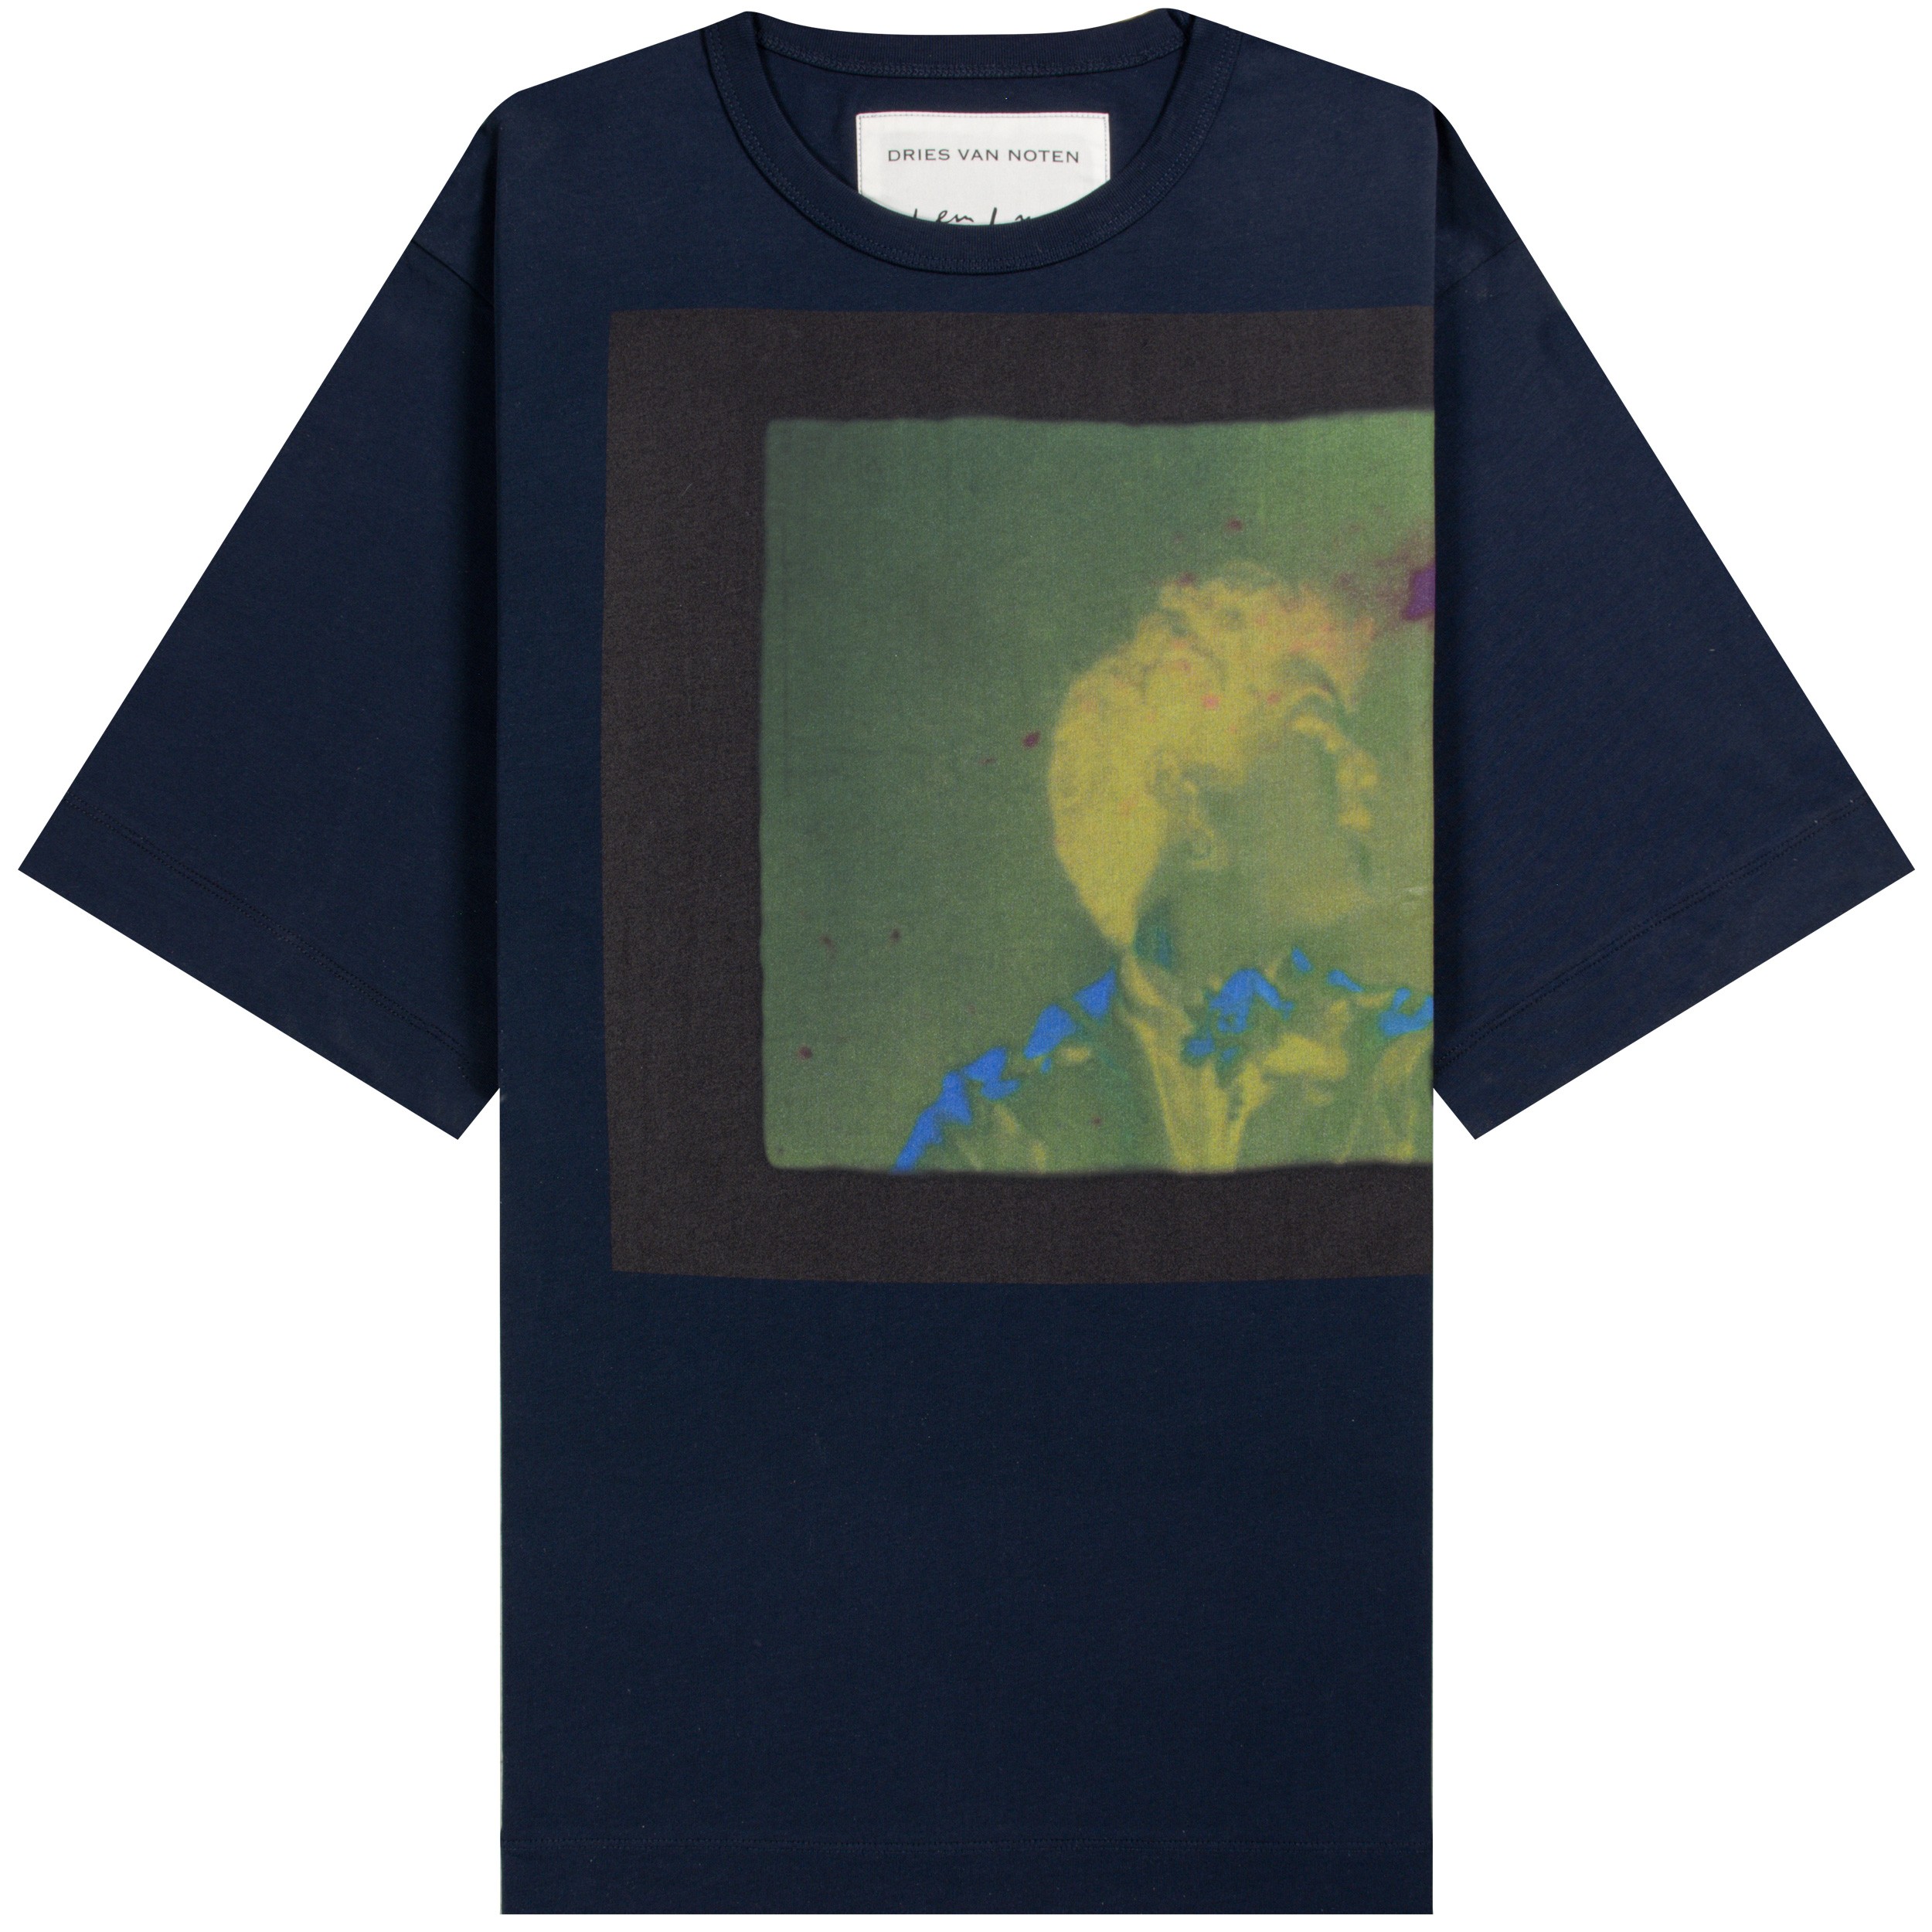 Dries Van Noten Len Lye 'Rainbow Dance' Print T-Shirt Navy